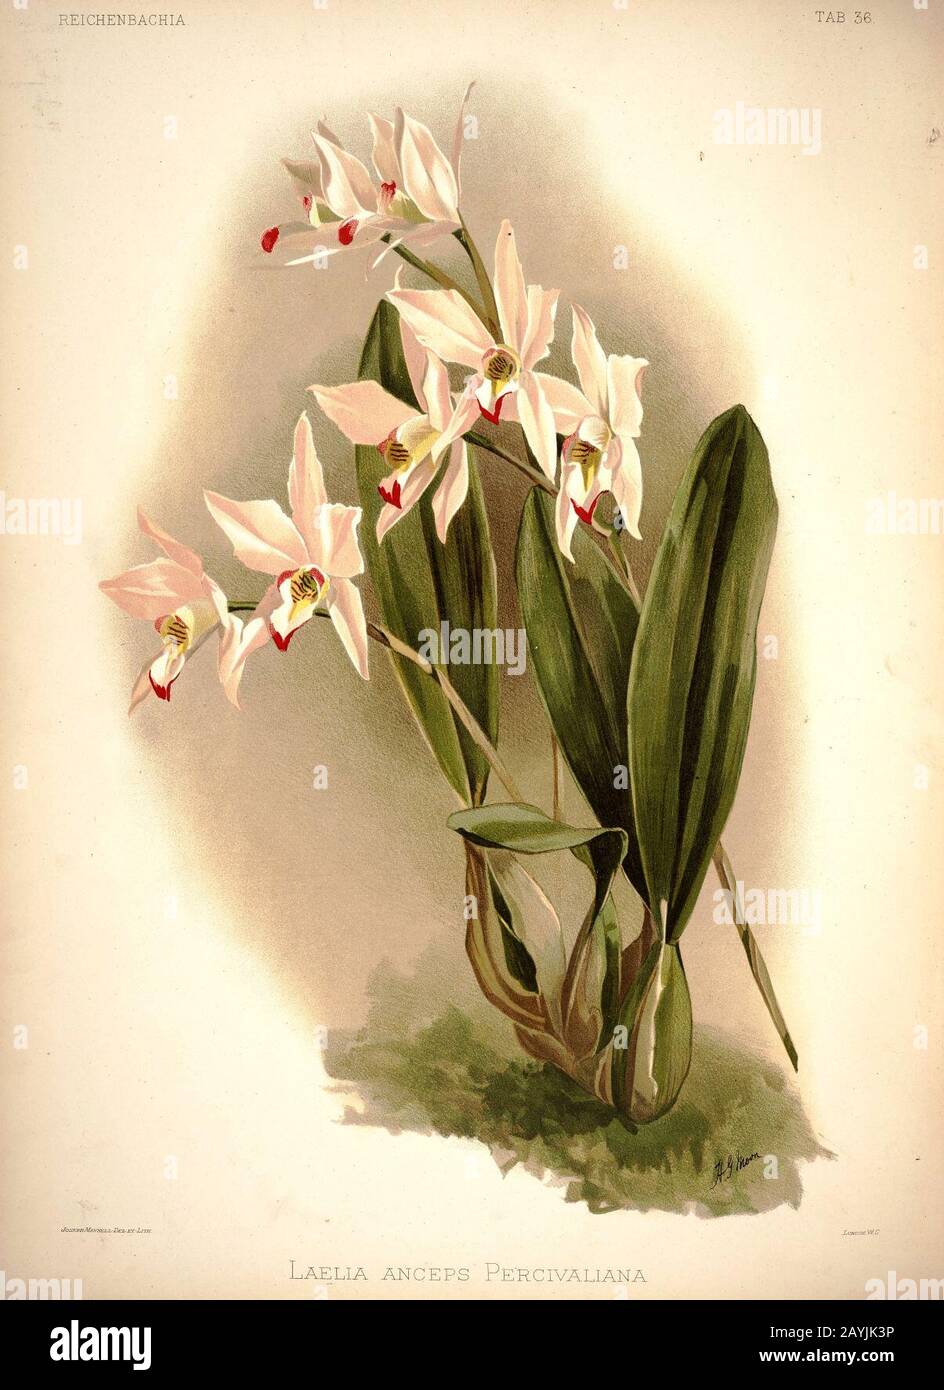 Frederick Sander - Reichenbachia I plate 36 (1888) - Laelia anceps percivaliana. Stock Photo